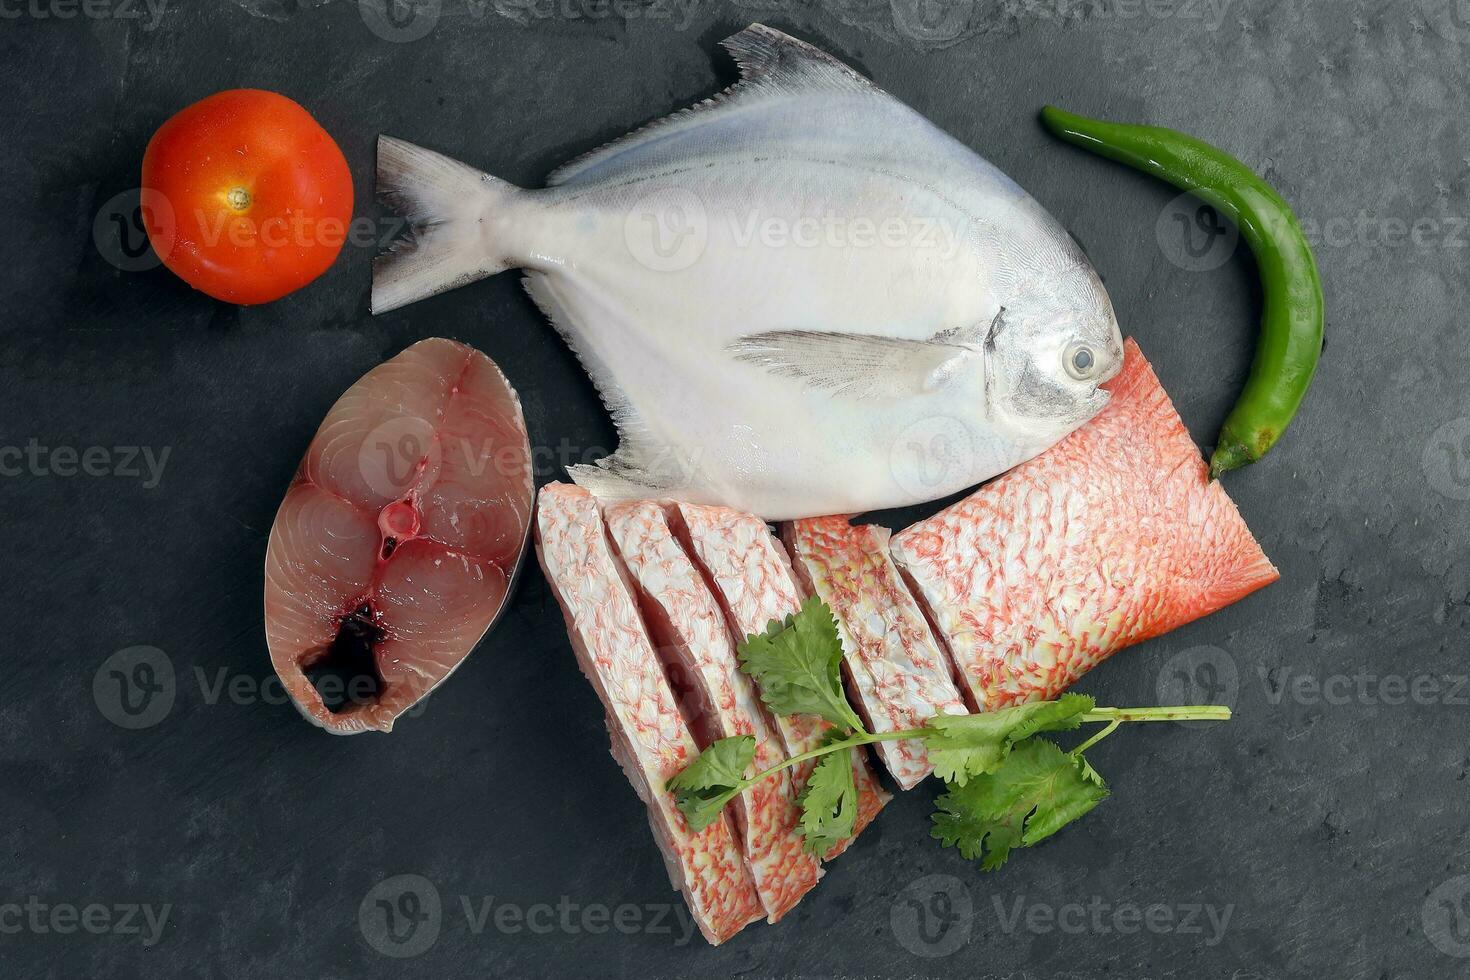 White pomfret Spanish mackerel red snapper fish cleaned descaled degutted sliced fillet pieces on black marble slate background photo